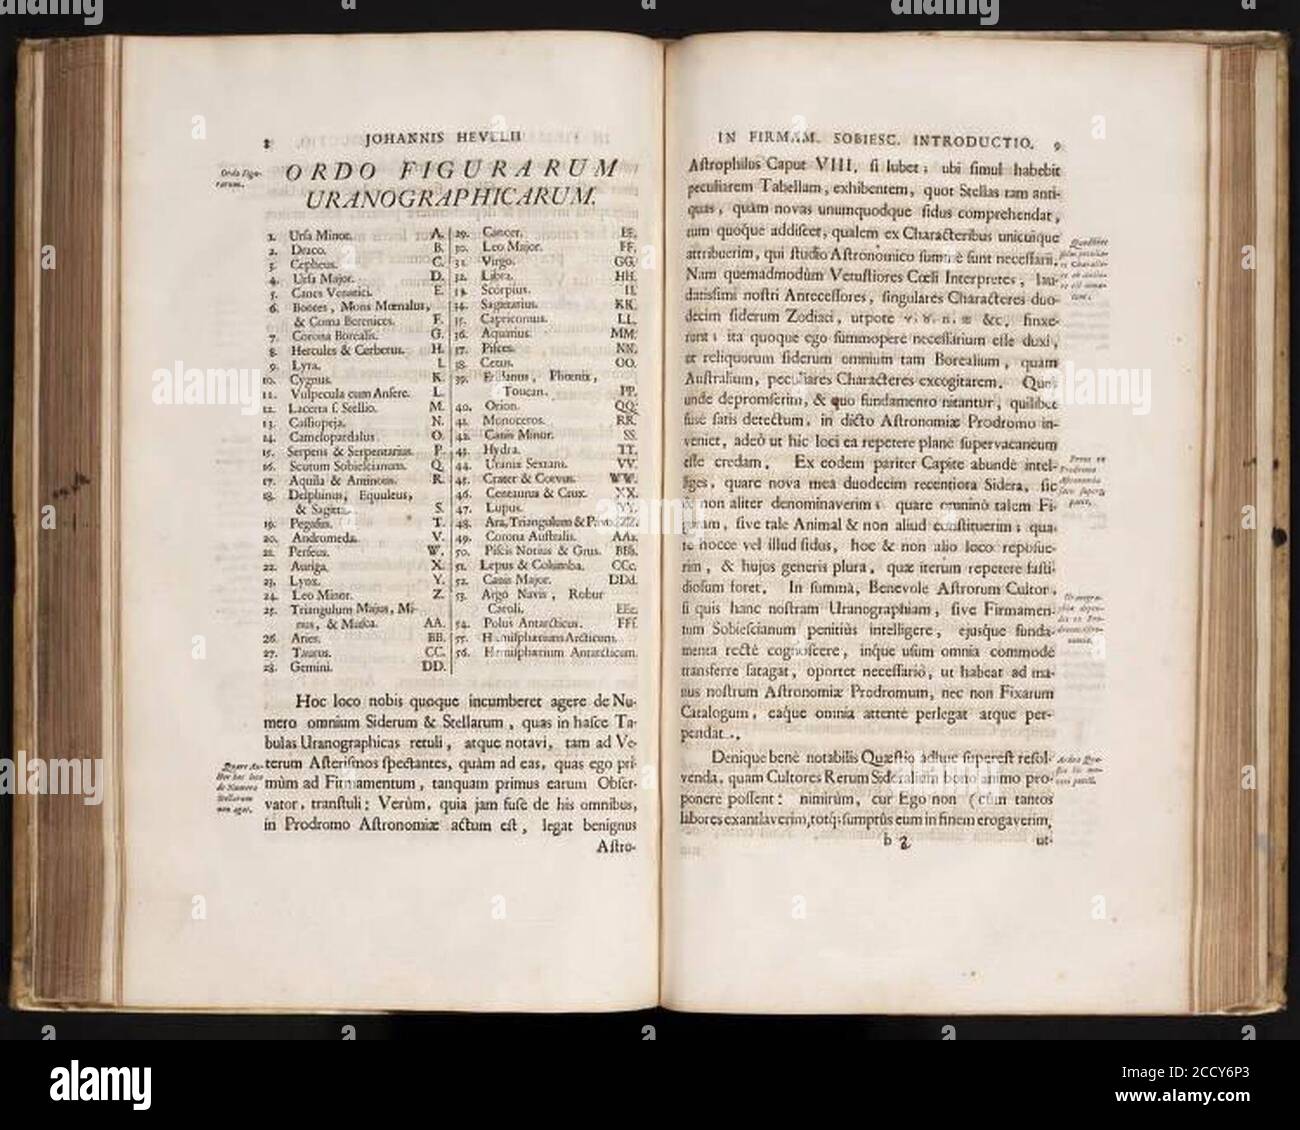 Johannes Hevelius - Prodromus Astronomia - Volume III ‘Firmamentum Sobiescianum sive uranographia‘ - Elenco delle tavole. Stock Photo